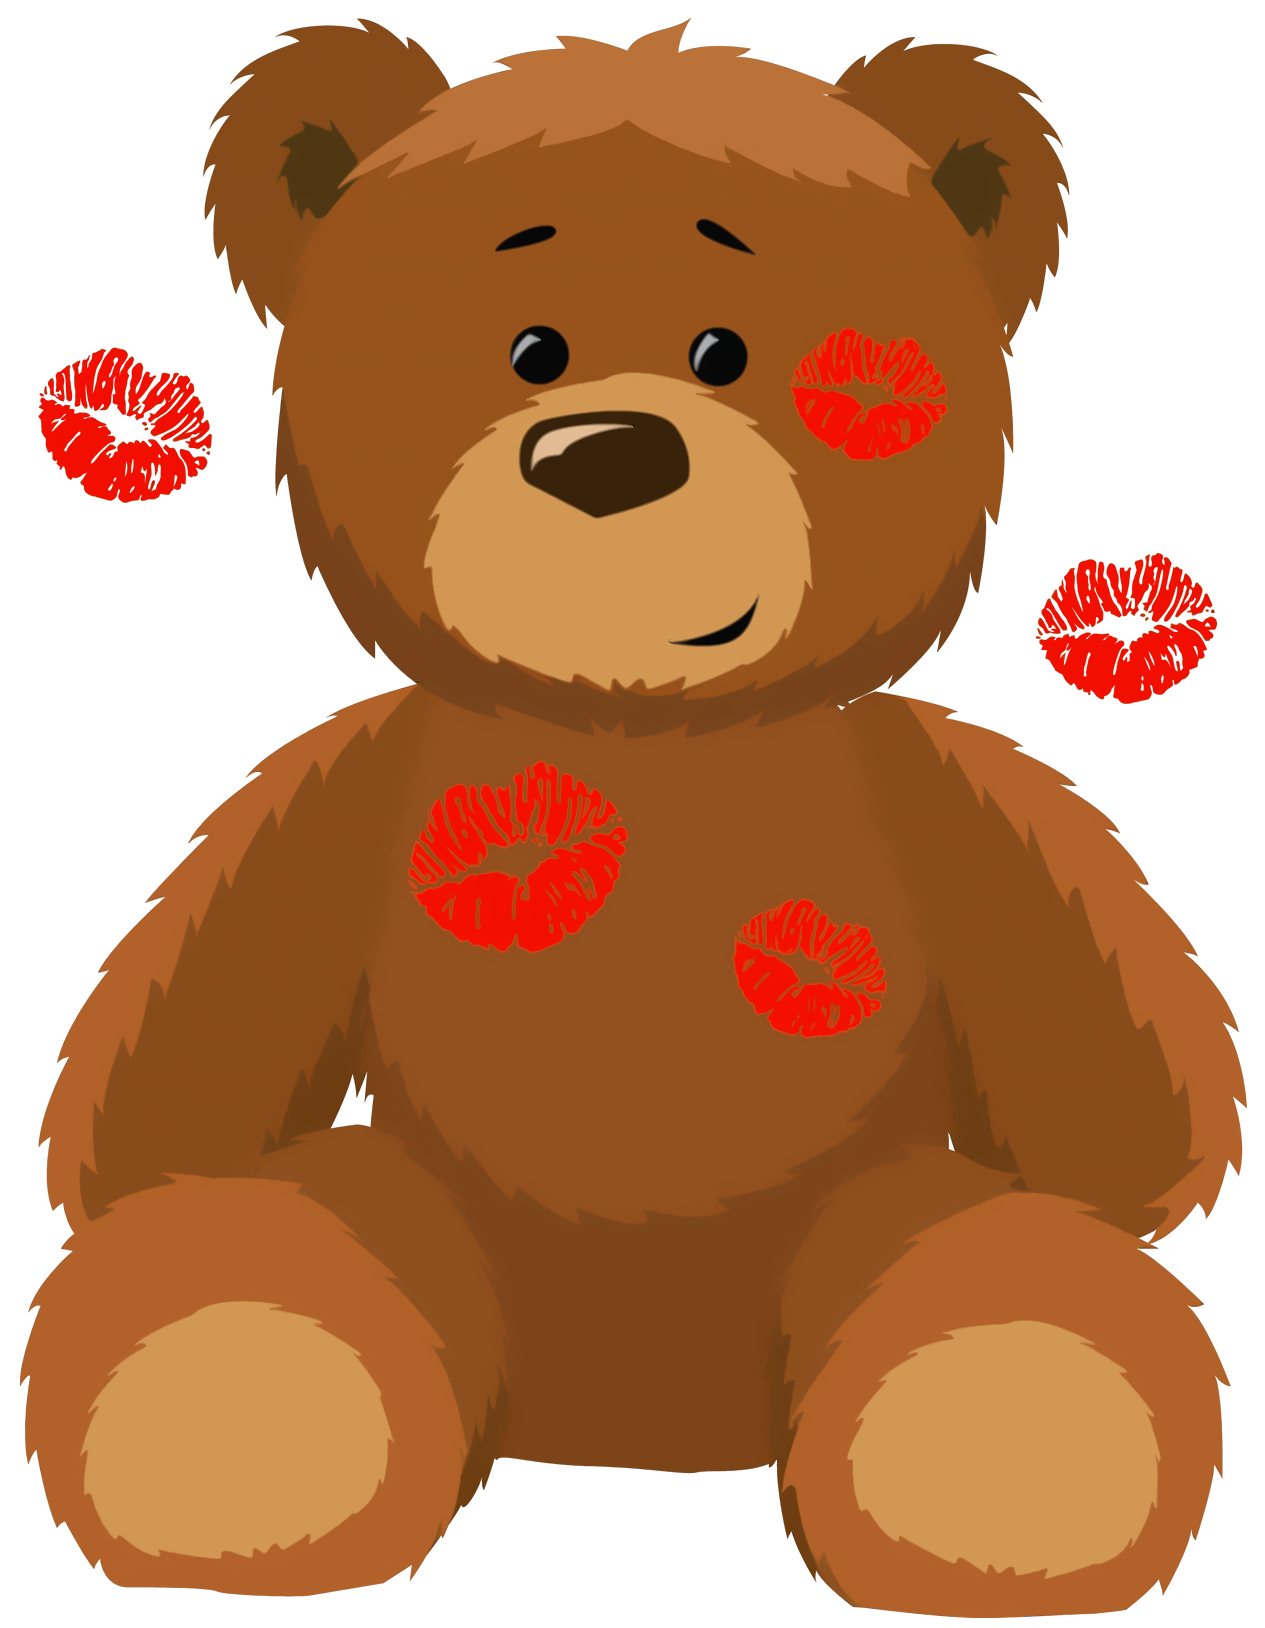 Free valentine bear.